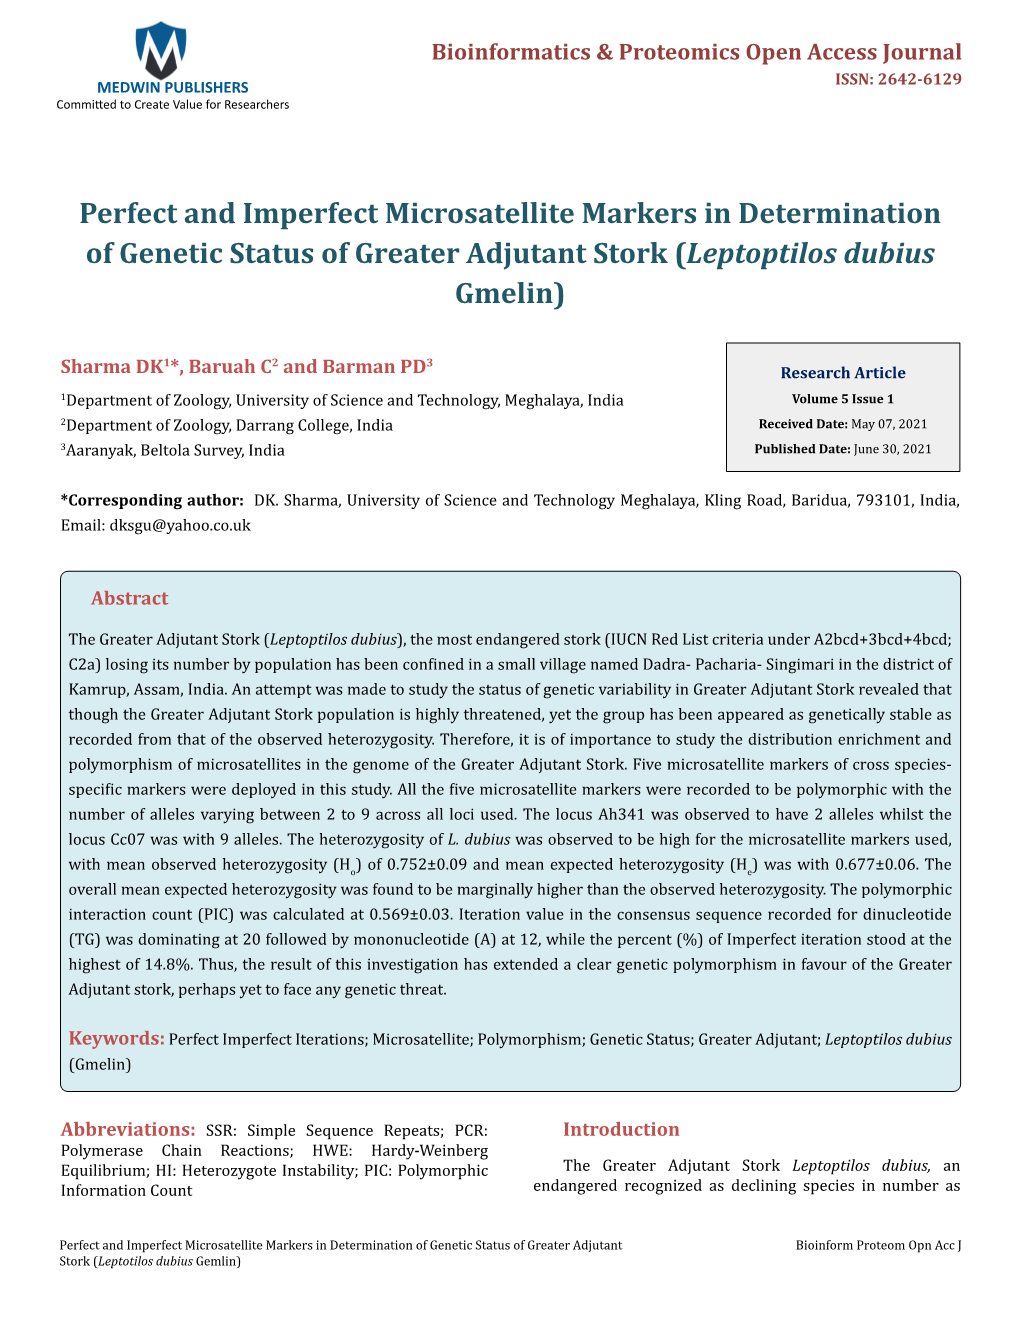 Perfect and Imperfect Microsatellite Markers in Determination of Genetic Status of Greater Adjutant Stork (Leptoptilos Dubius Gmelin)